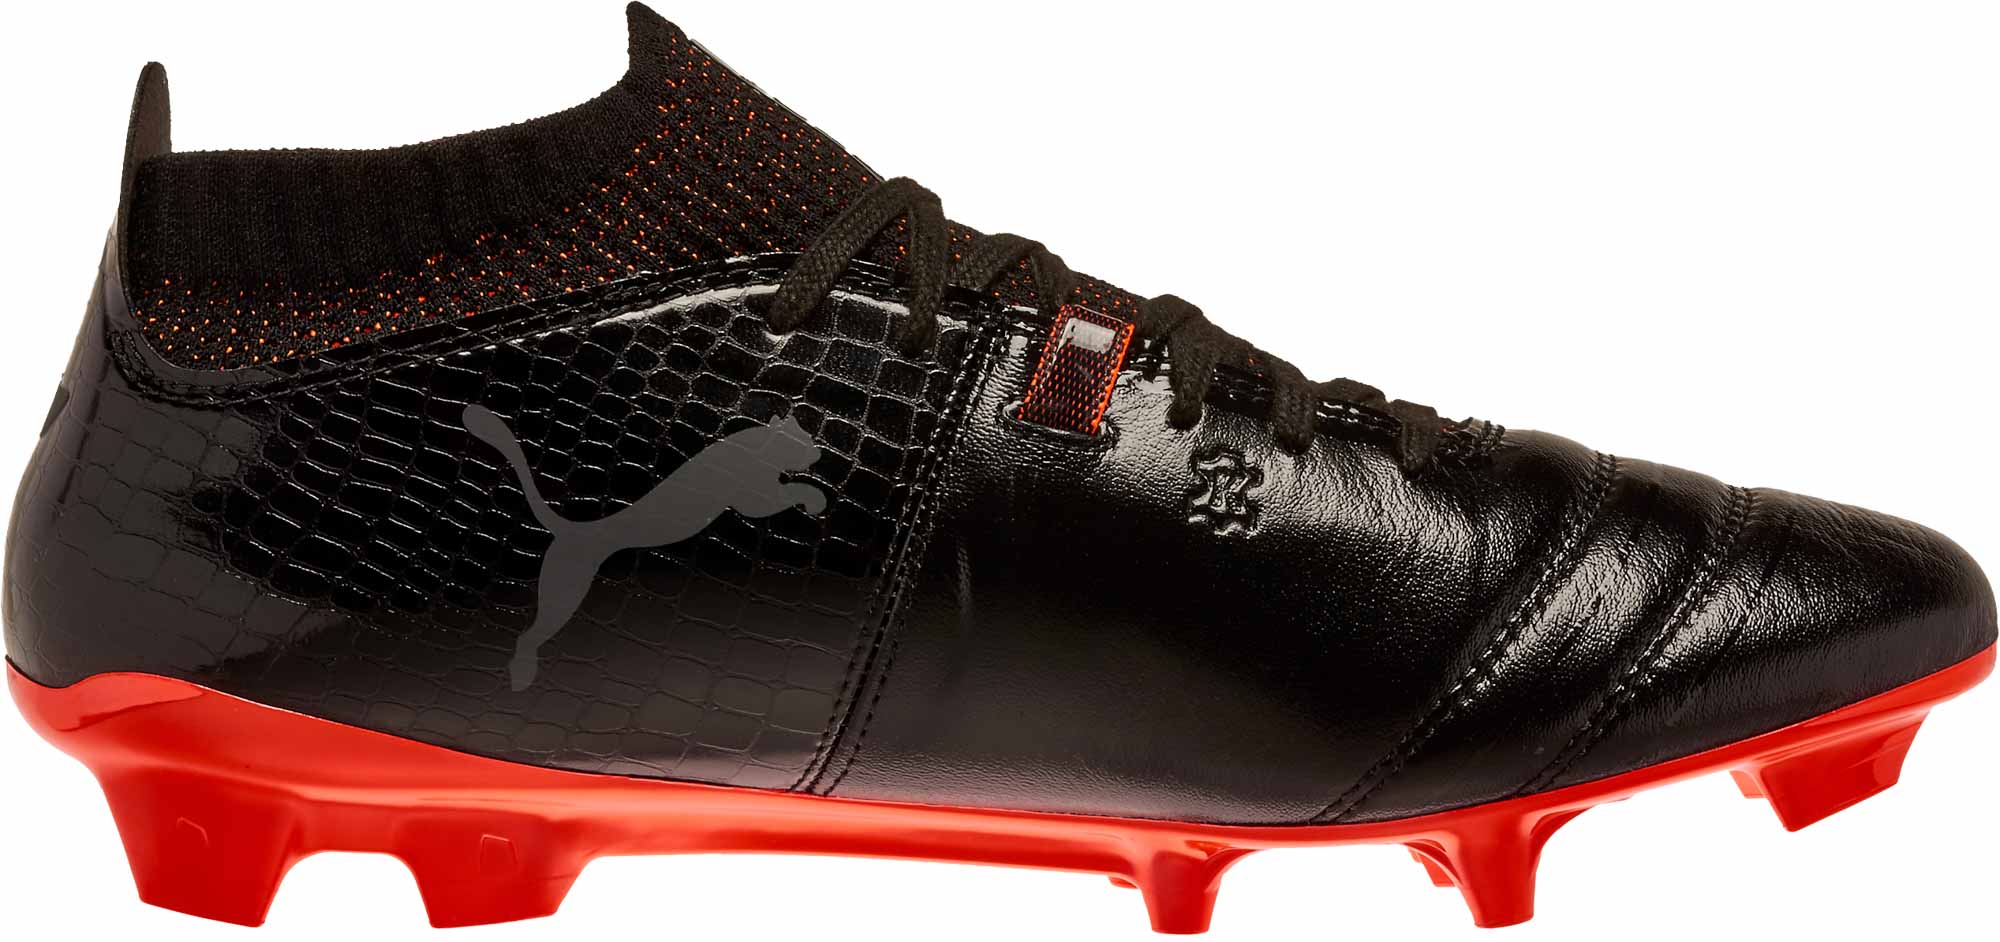 Puma One Lux FG - Black Puma Soccer Shoes